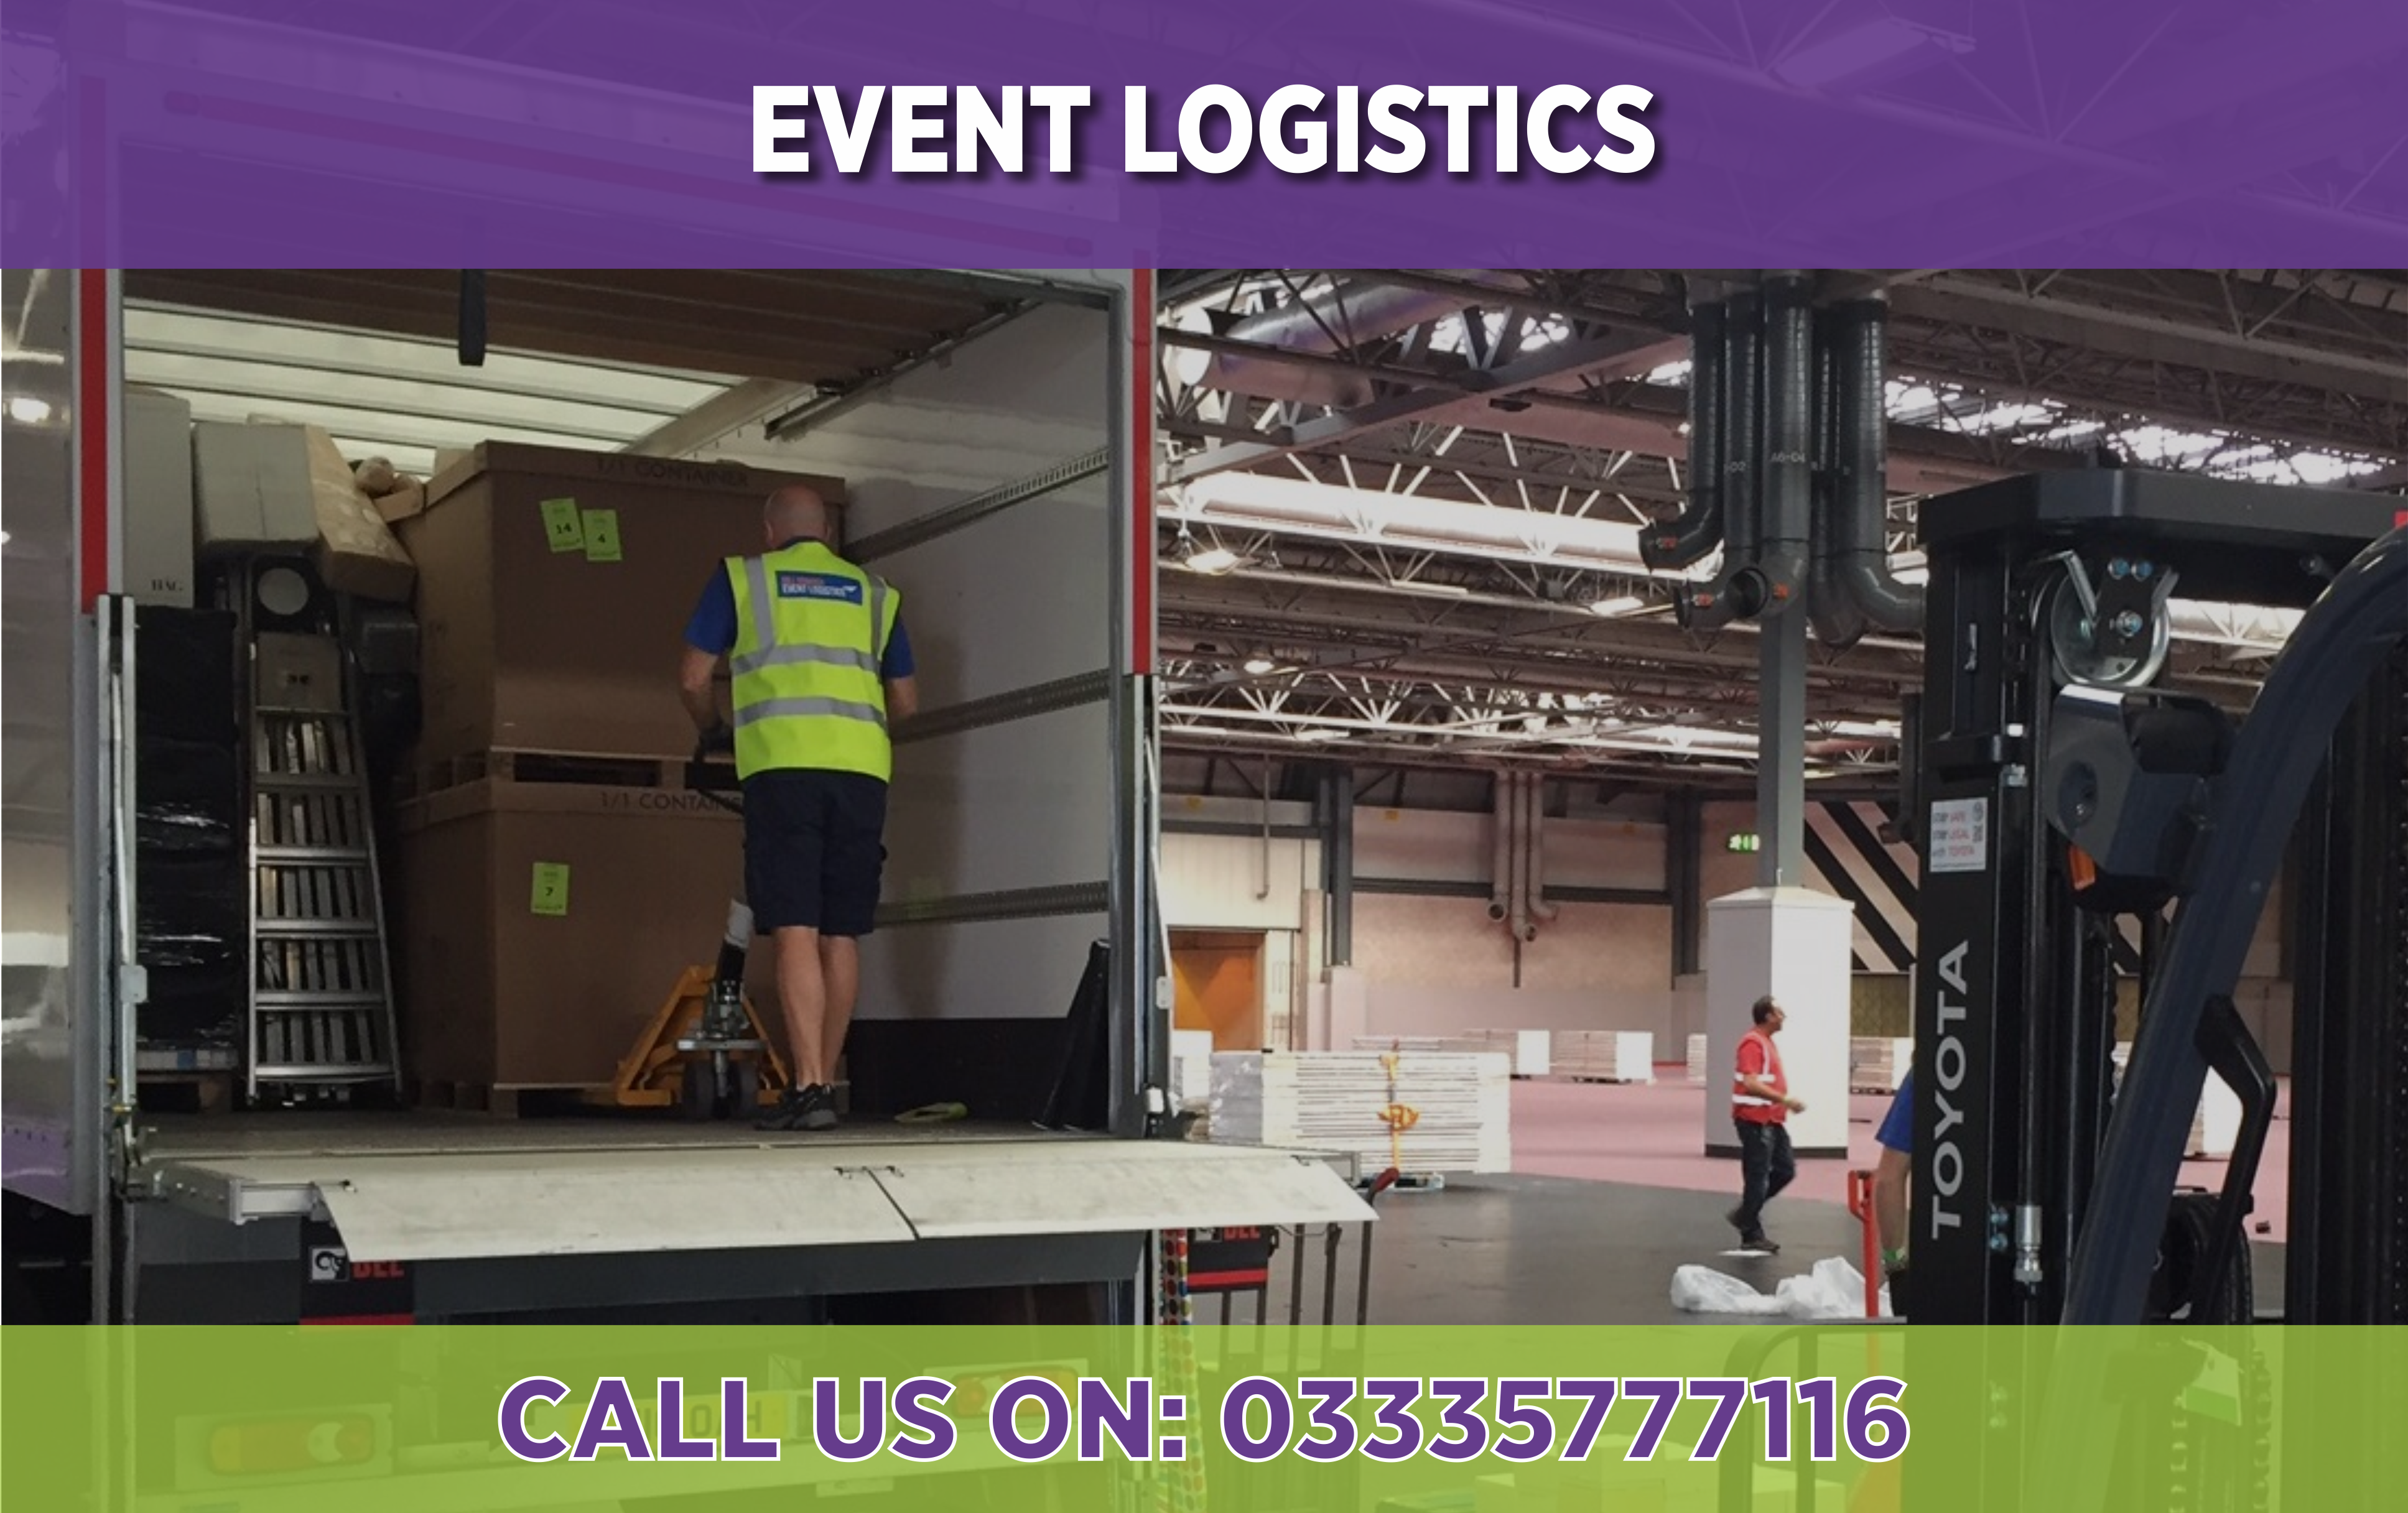 Dependable and efficient event logistics service